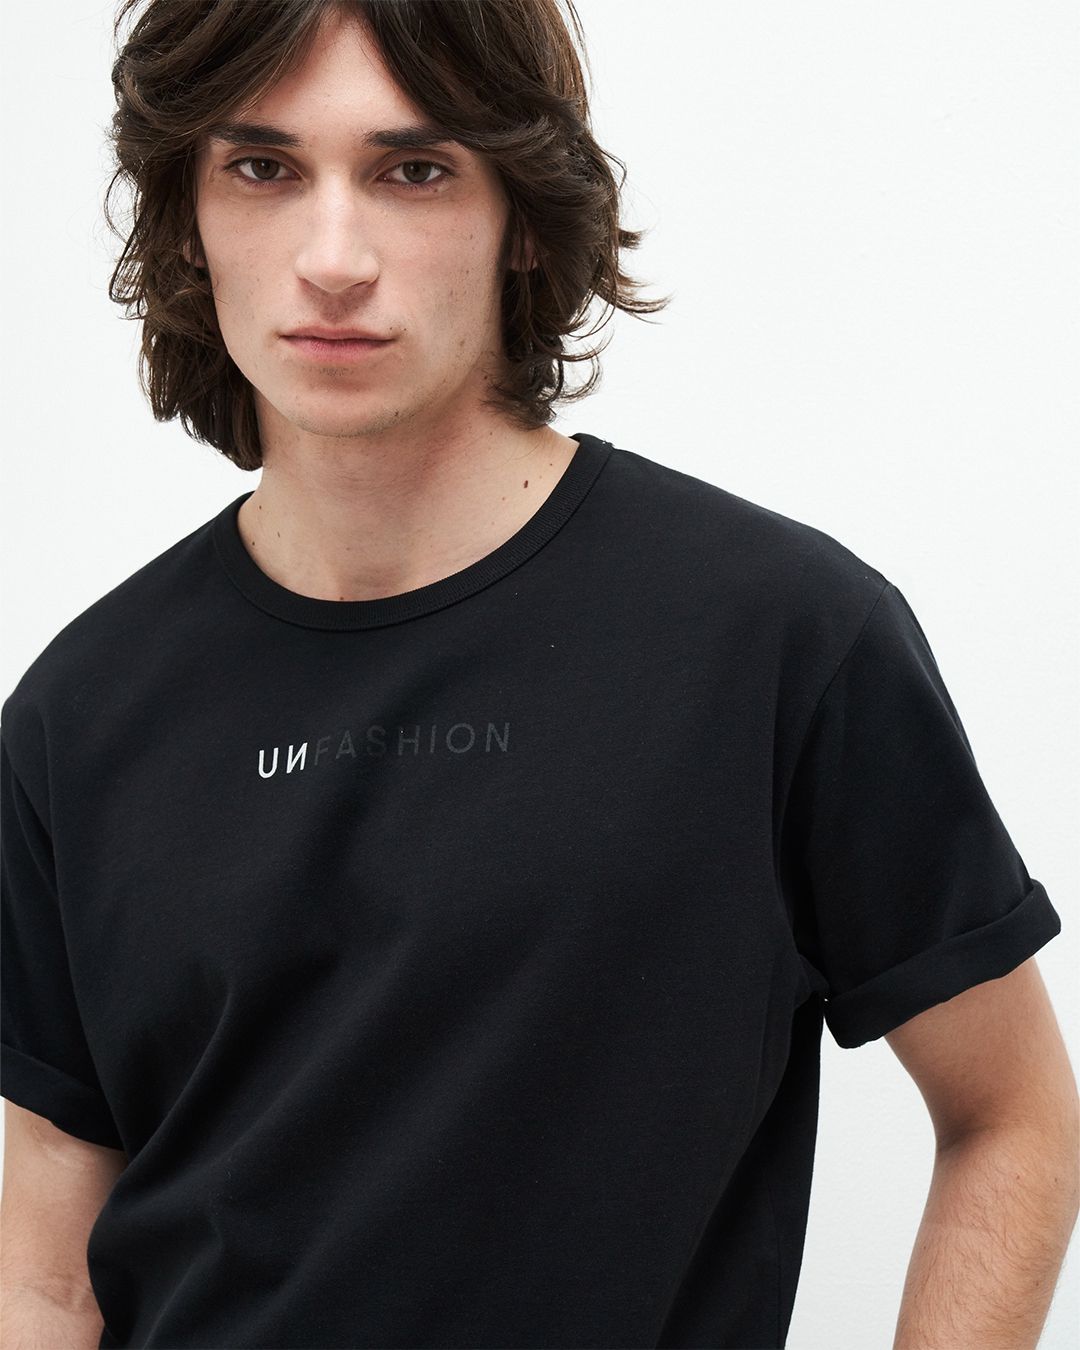 Liam T-shirt met UNFASHION tekst